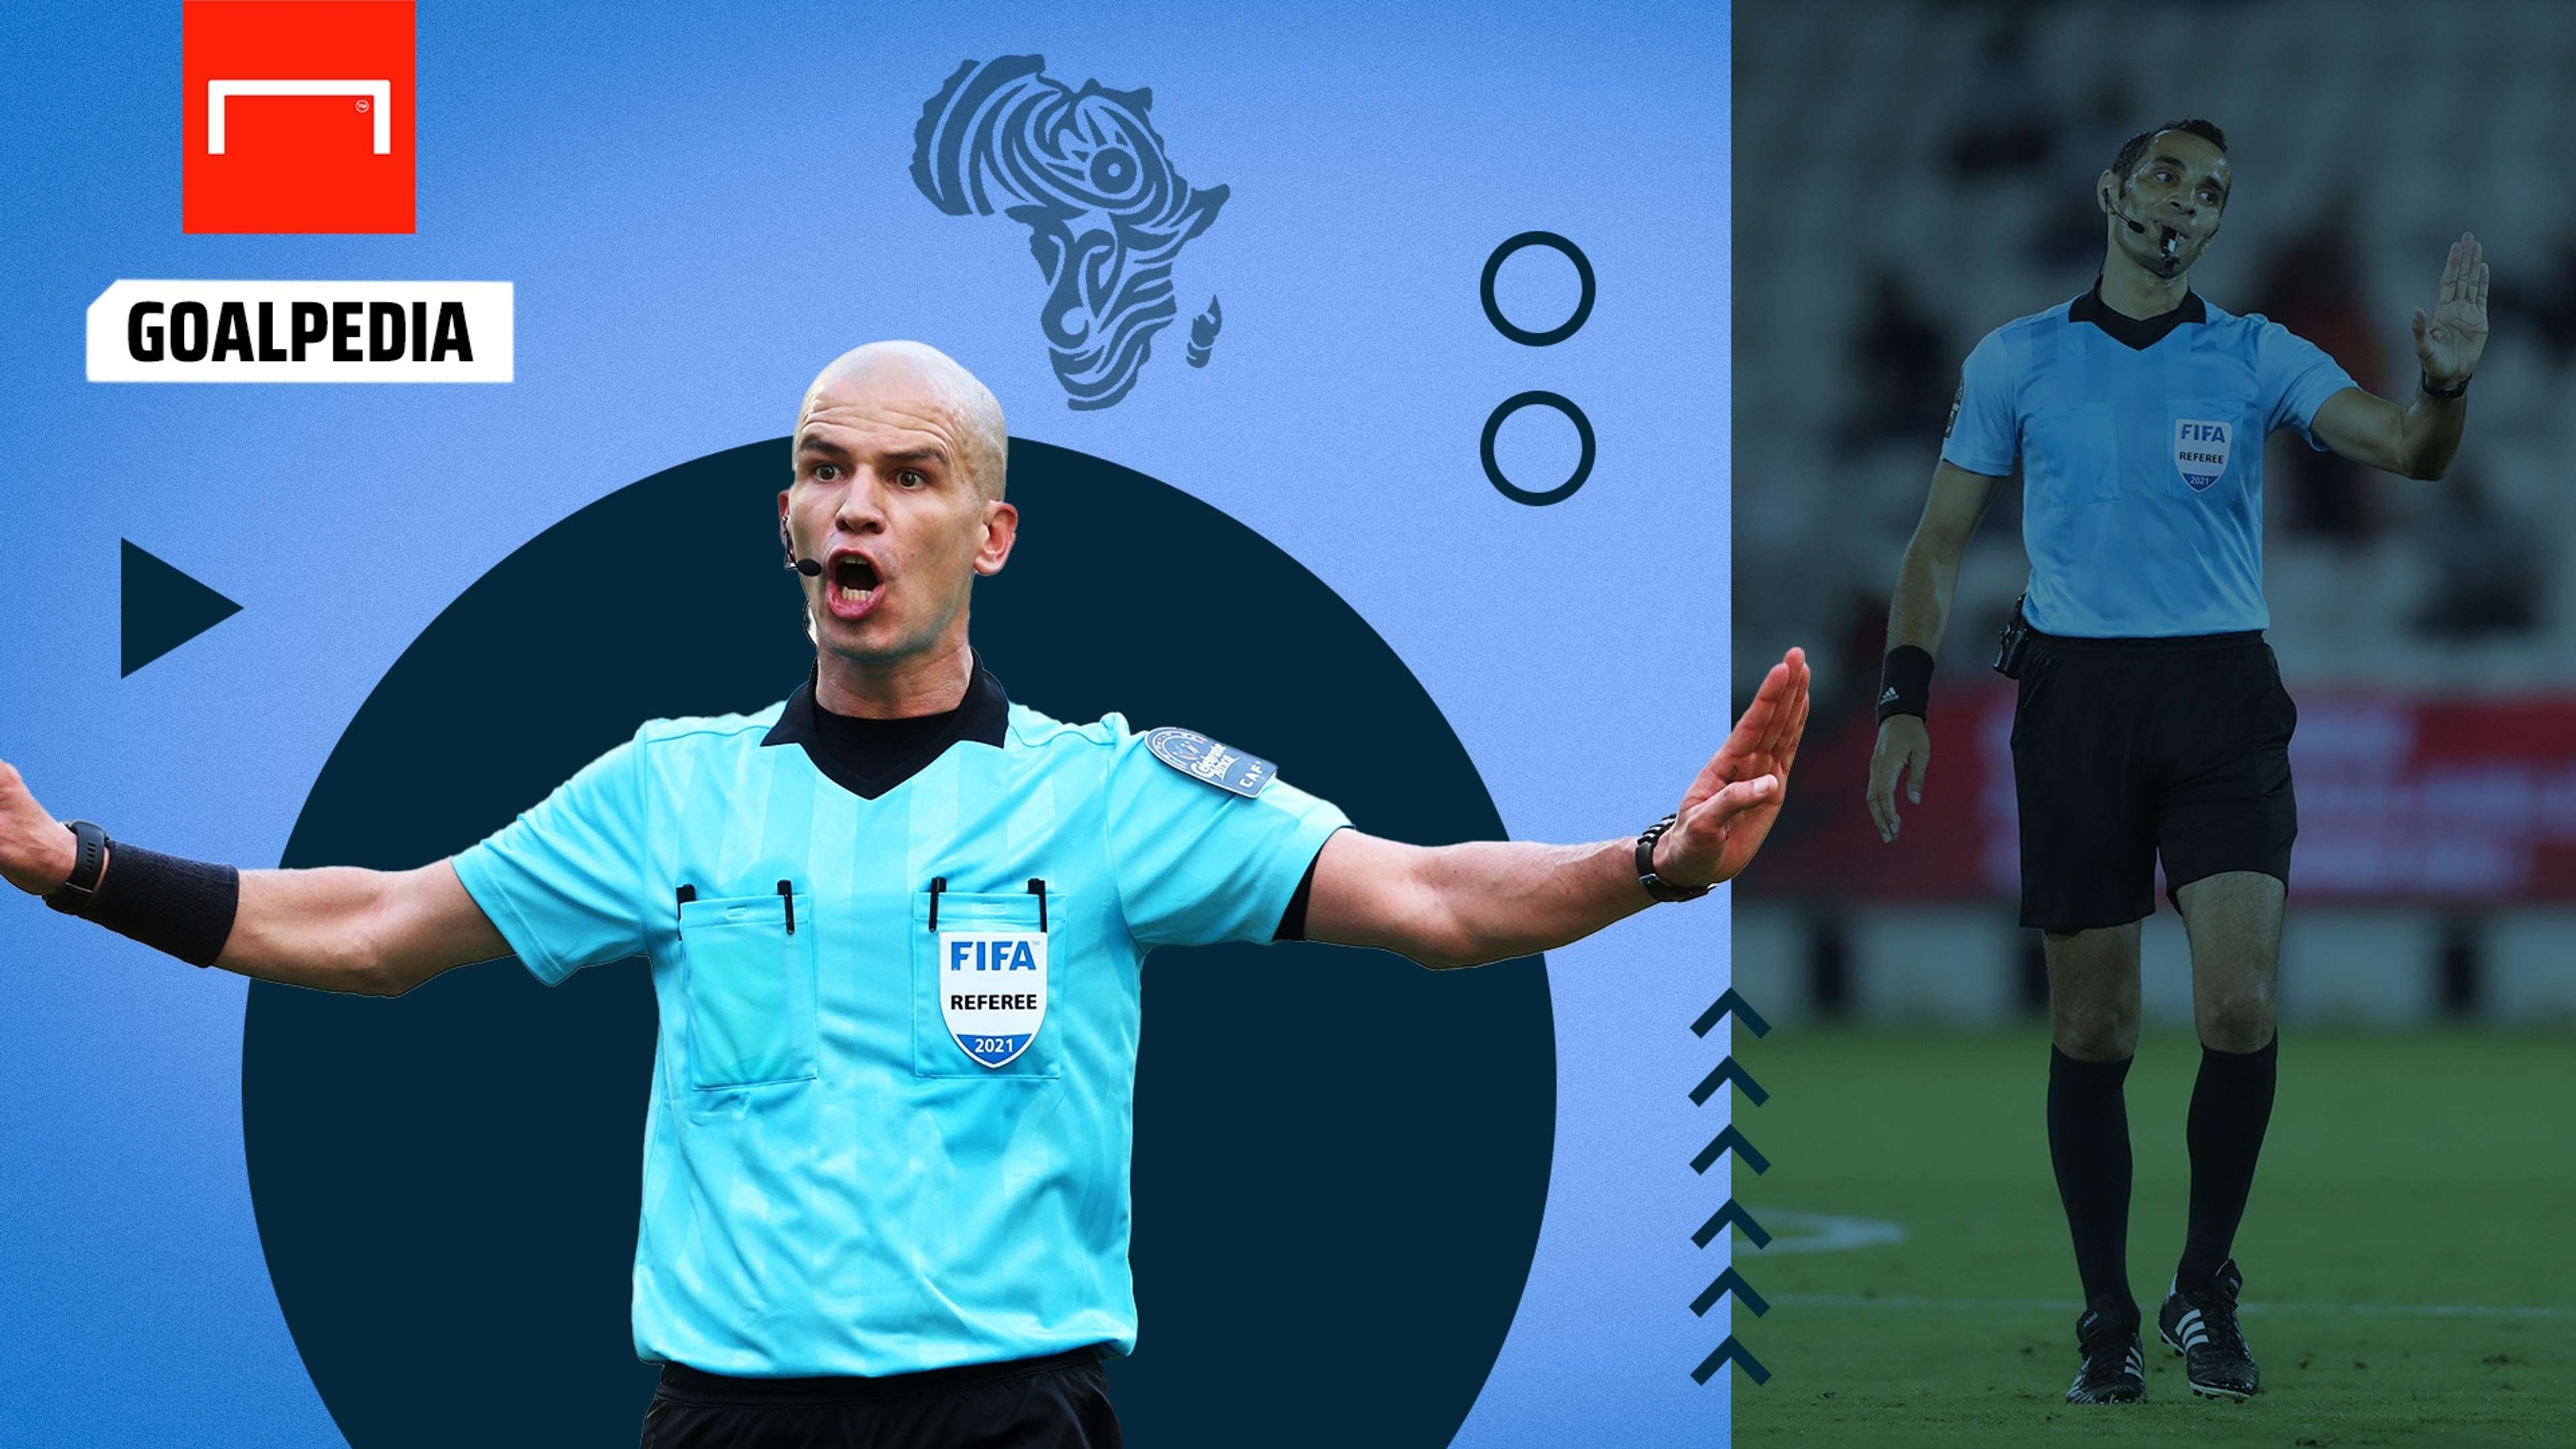 Goalpedia - Referee in African football.